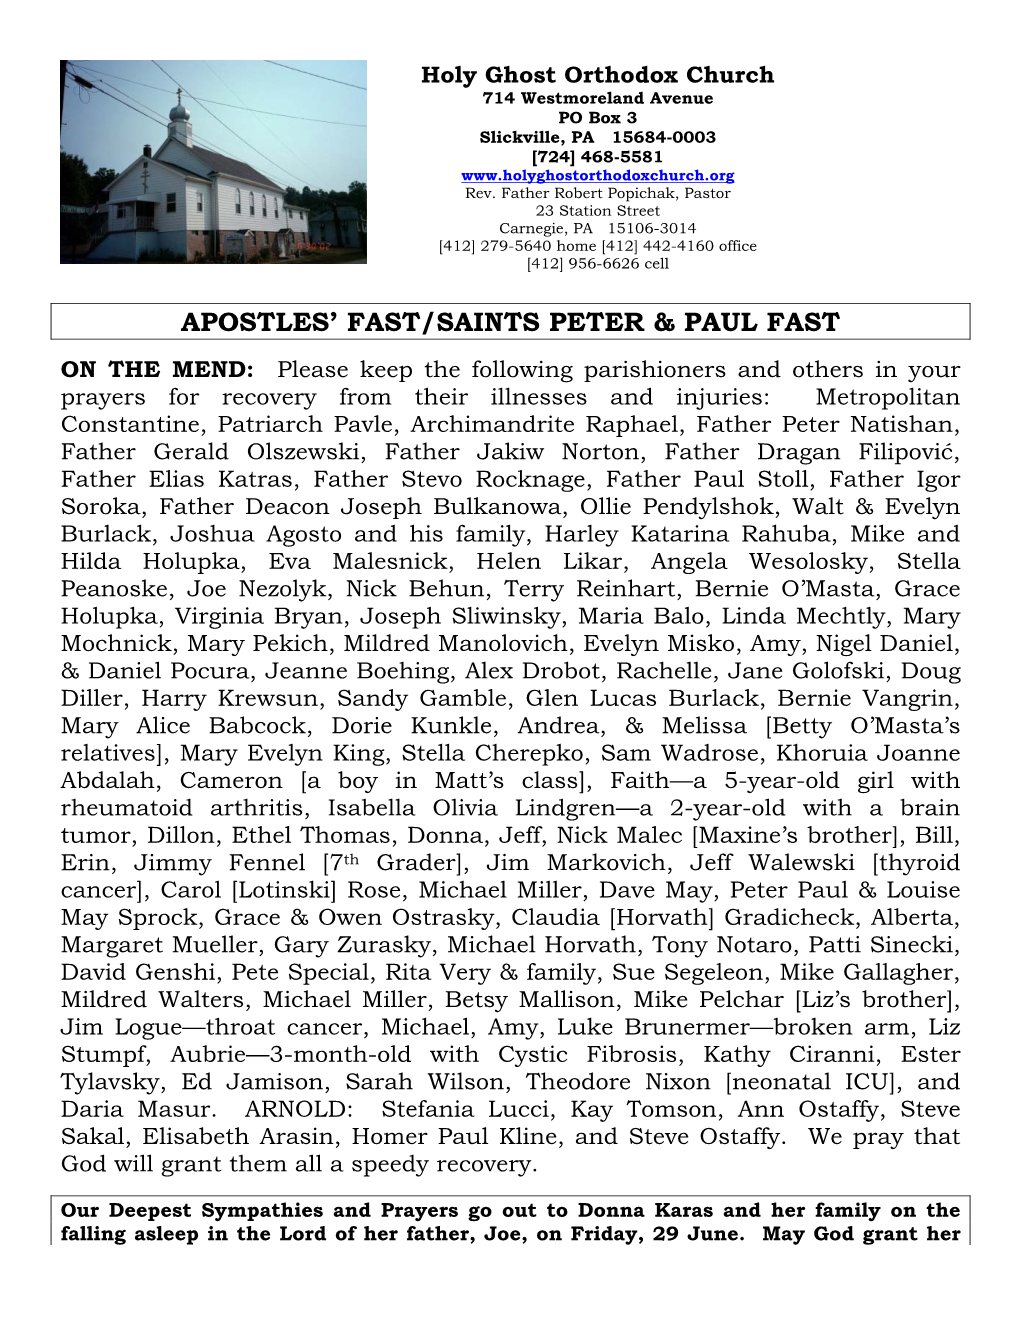 Apostles' Fast/Saints Peter & Paul Fast